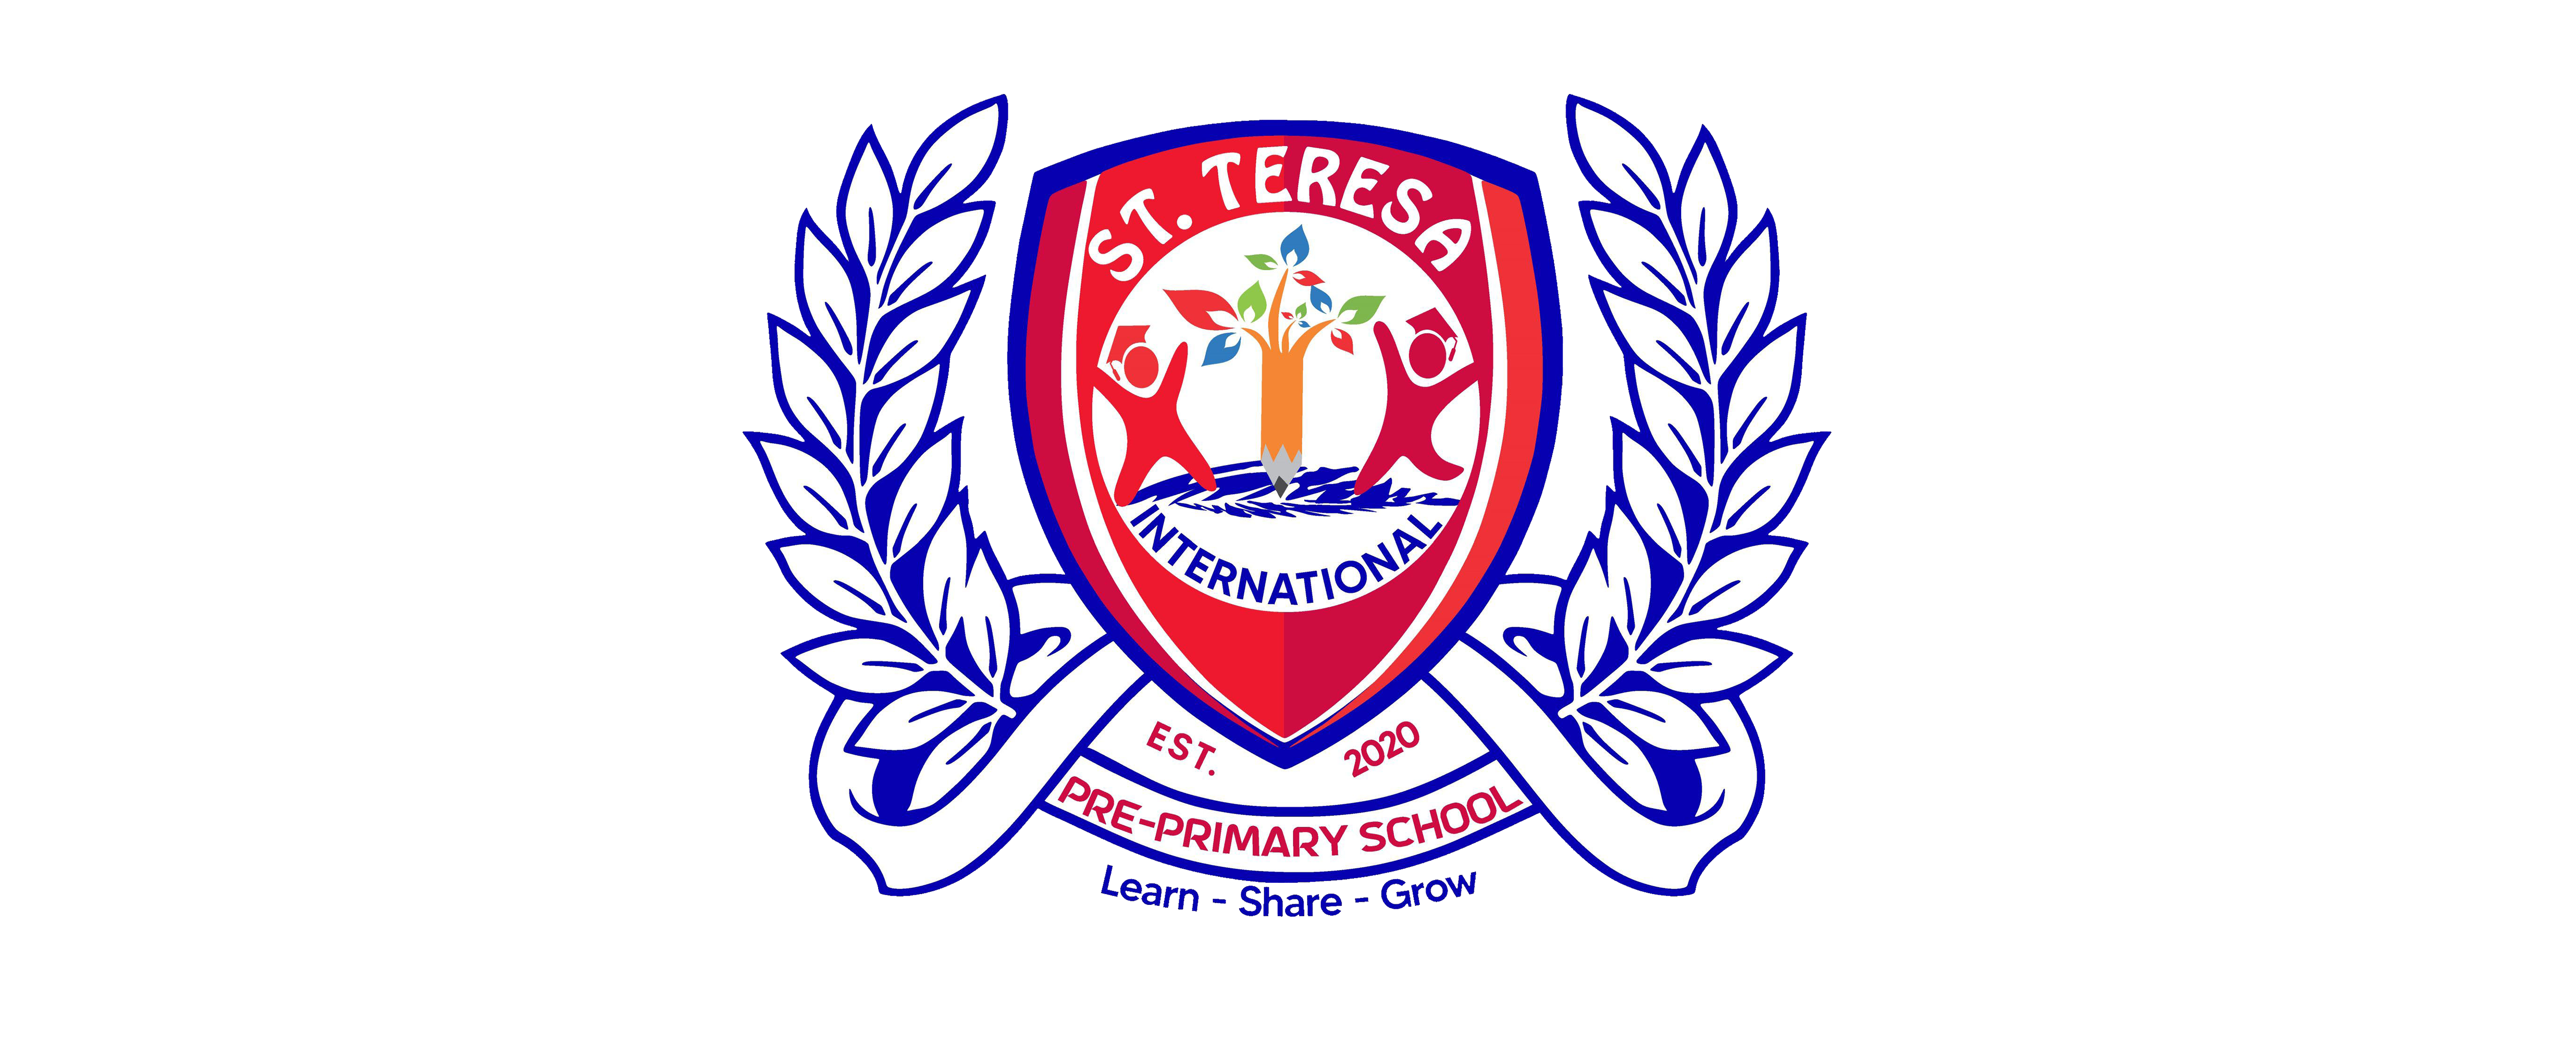 St. Teresa International Pre-Primary School